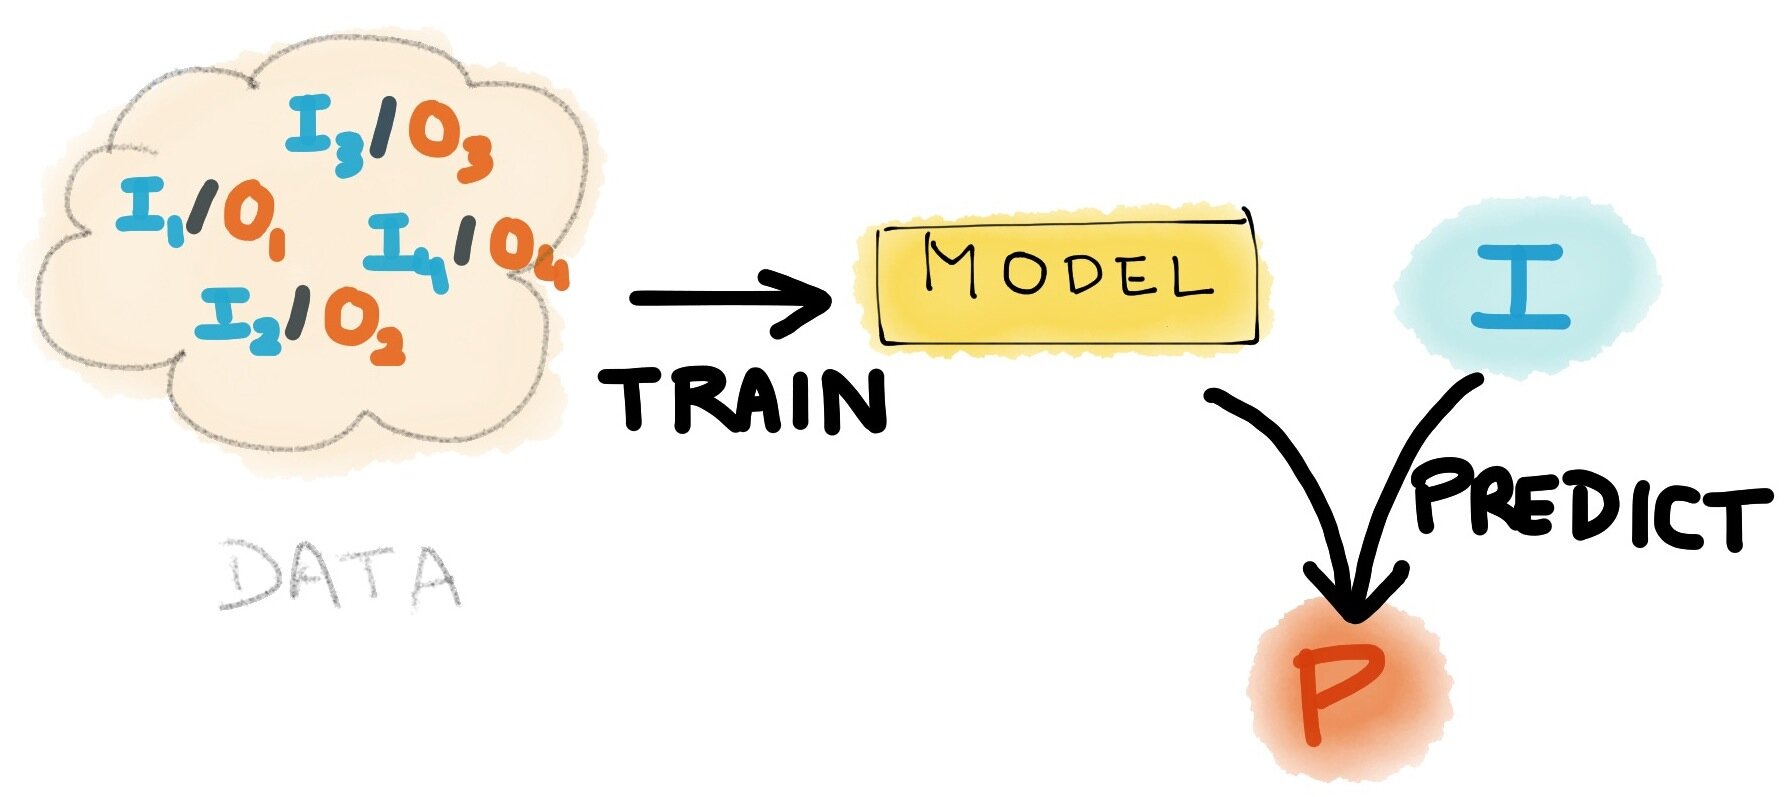 FIND train-predict diagram.JPG